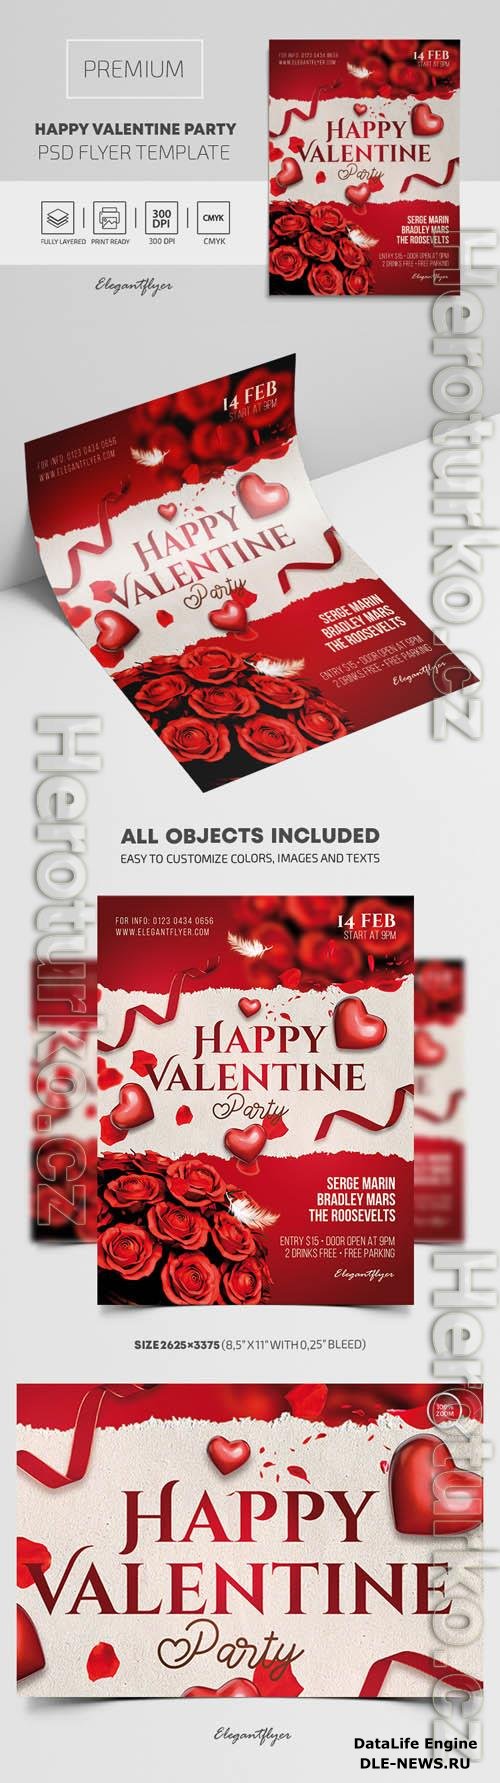 Happy Valentine Party Premium PSD Flyer Template